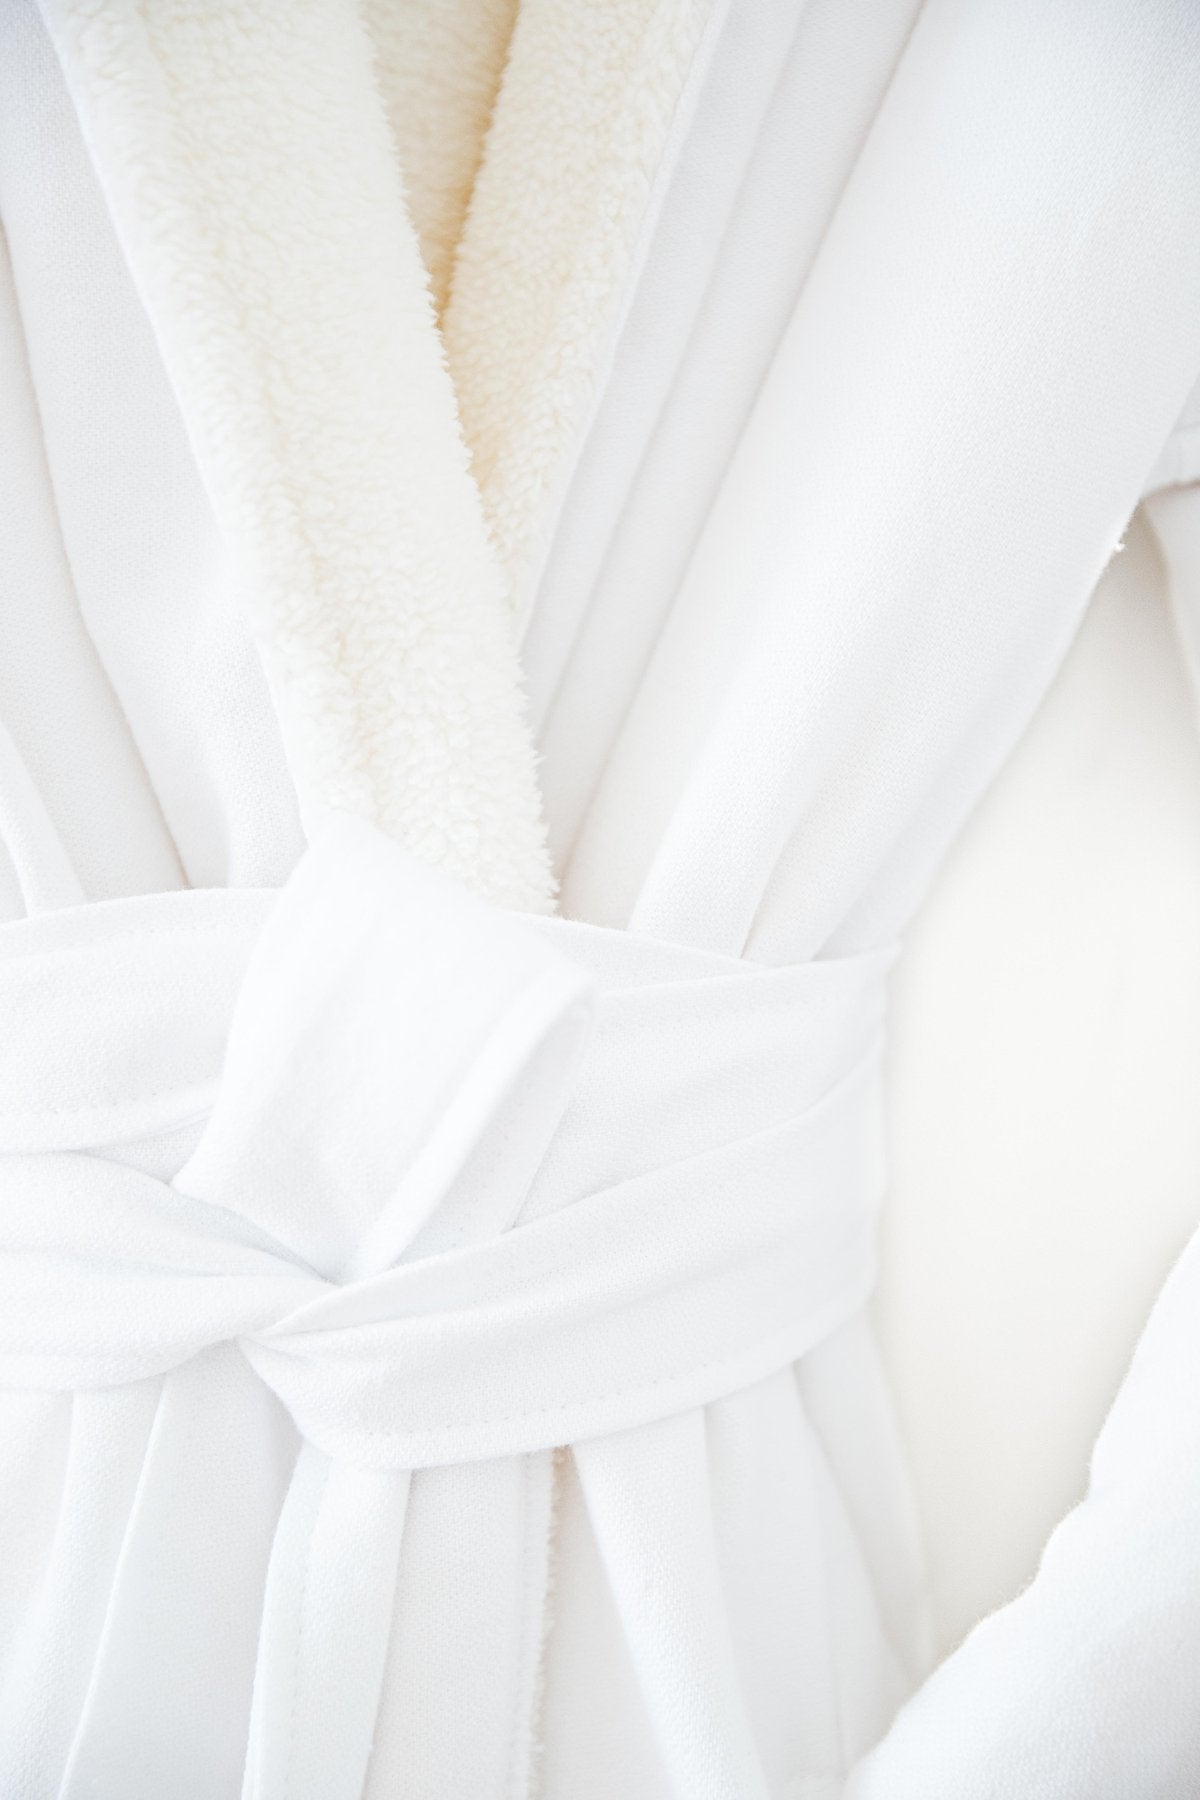 Tofino Towel The Nordic Robe | White, Navy + Grey